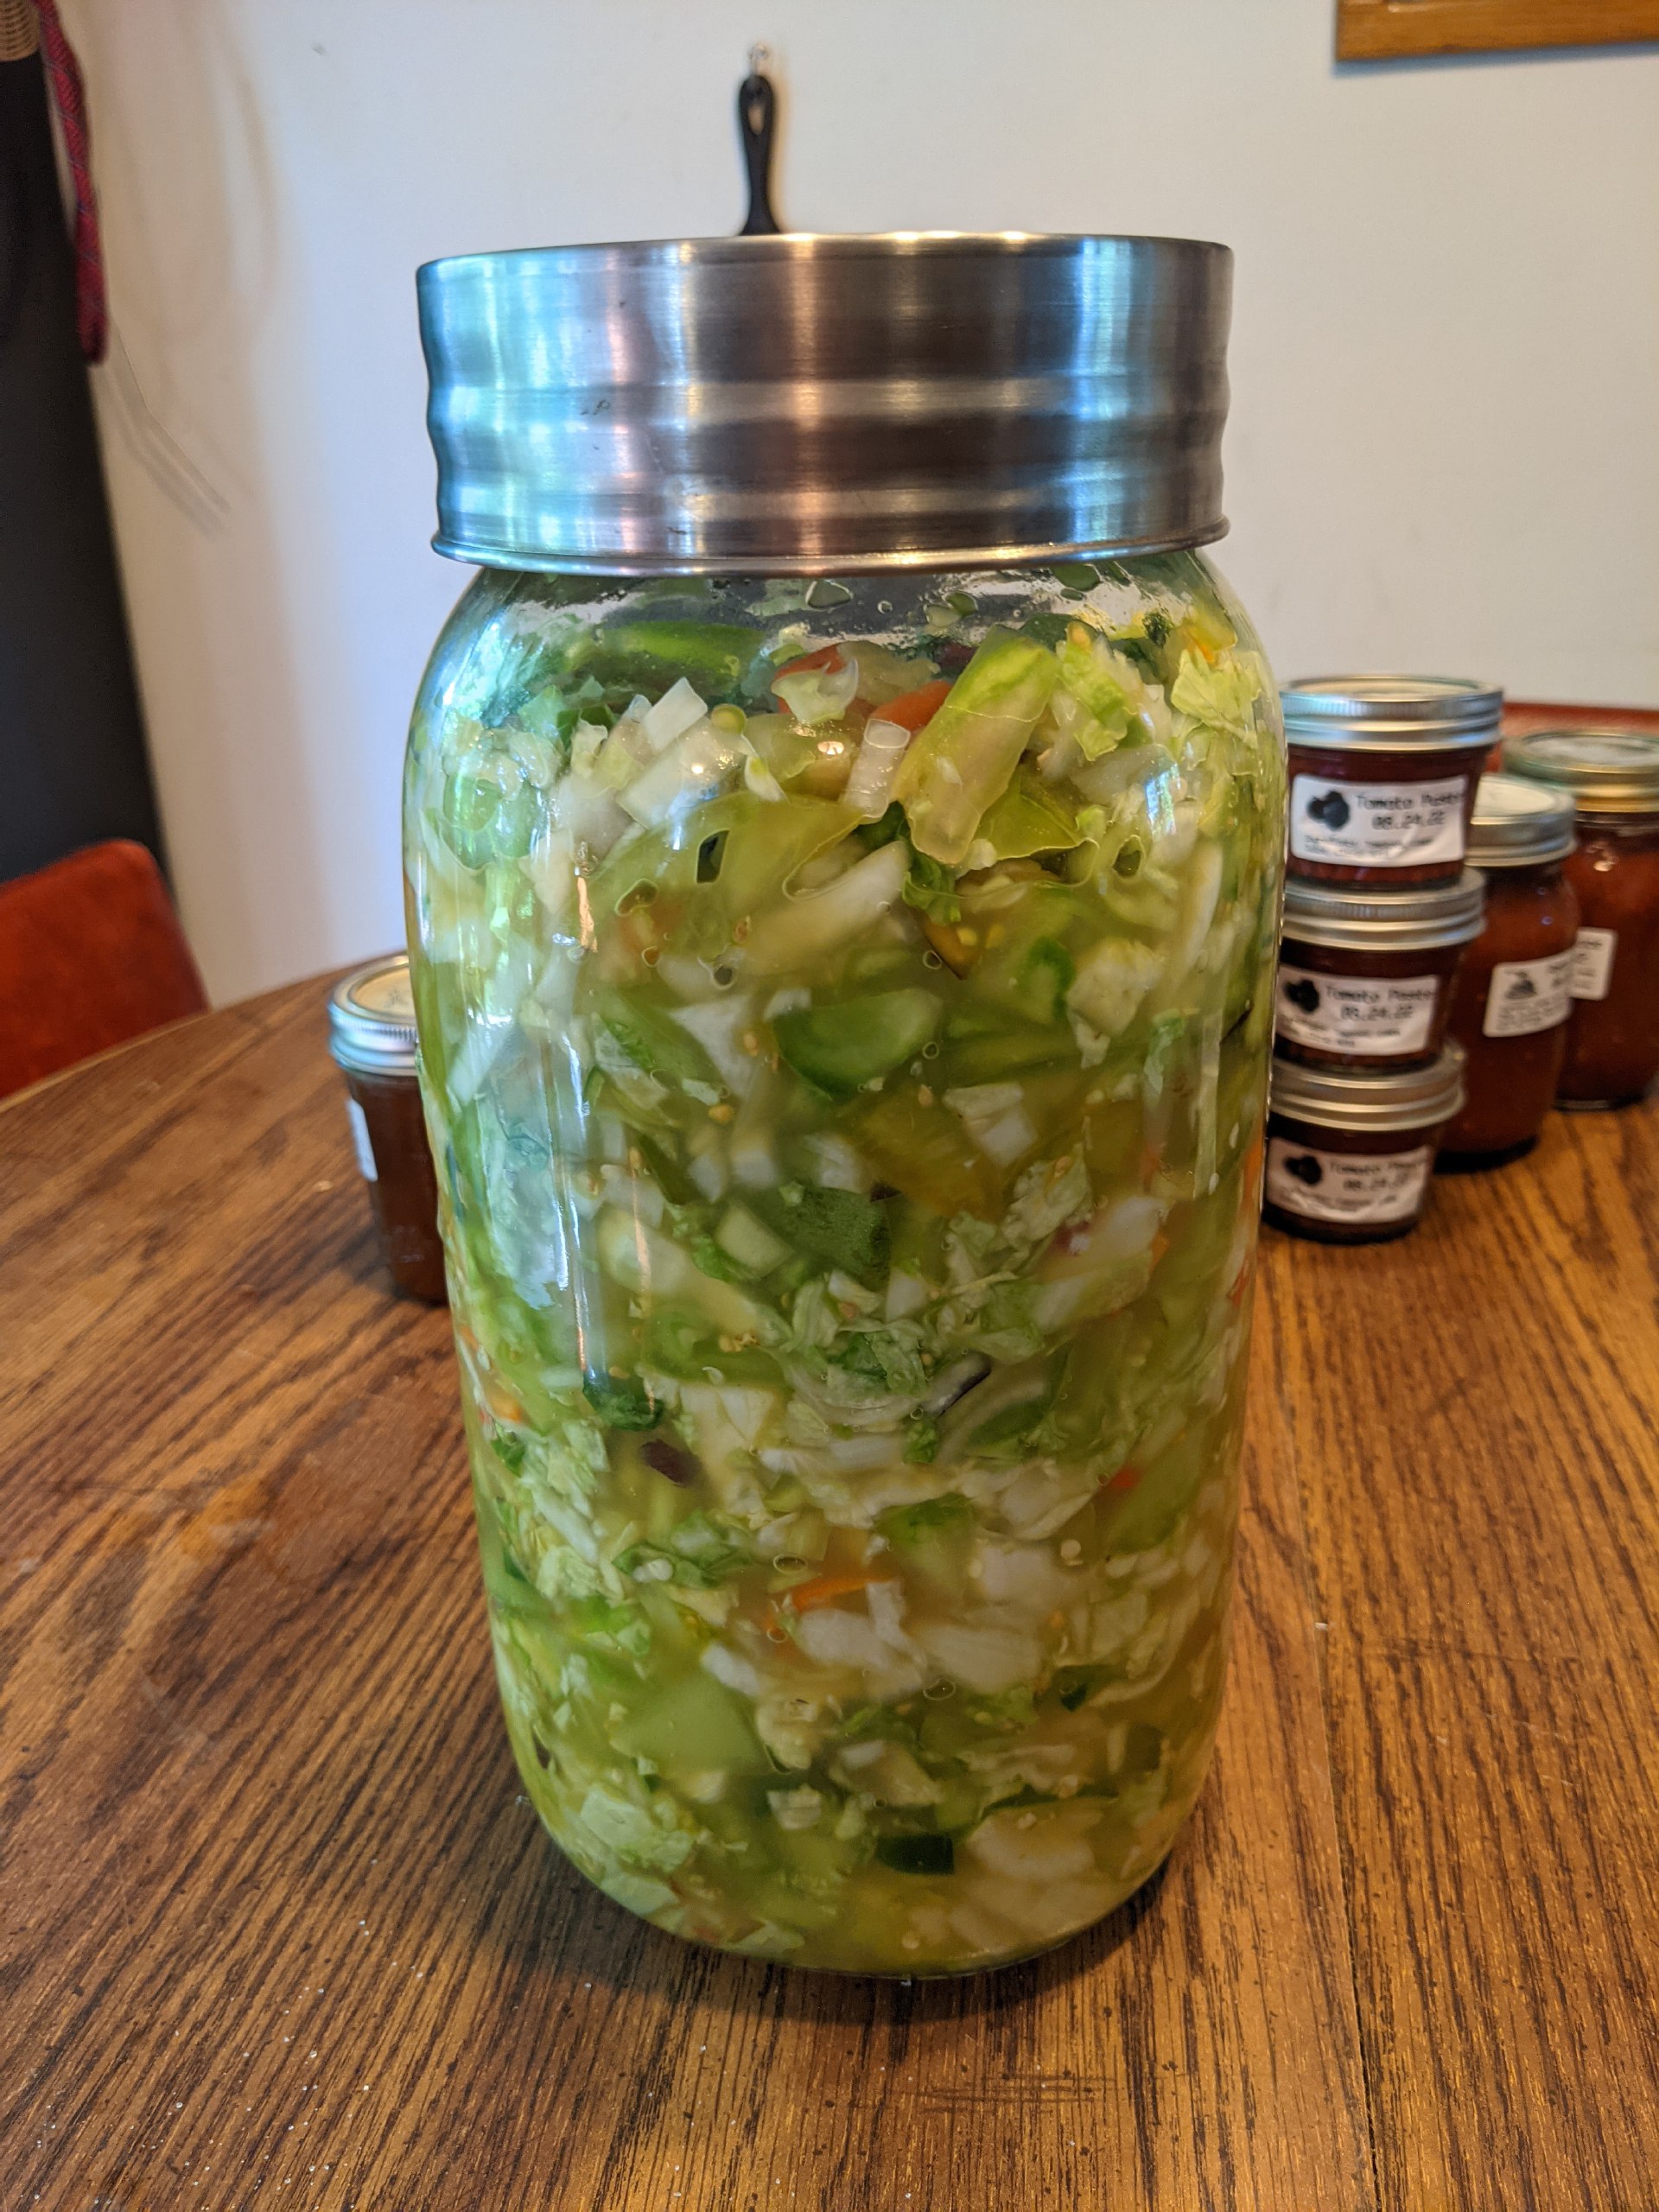 Chopped vegetables in jar with salt.